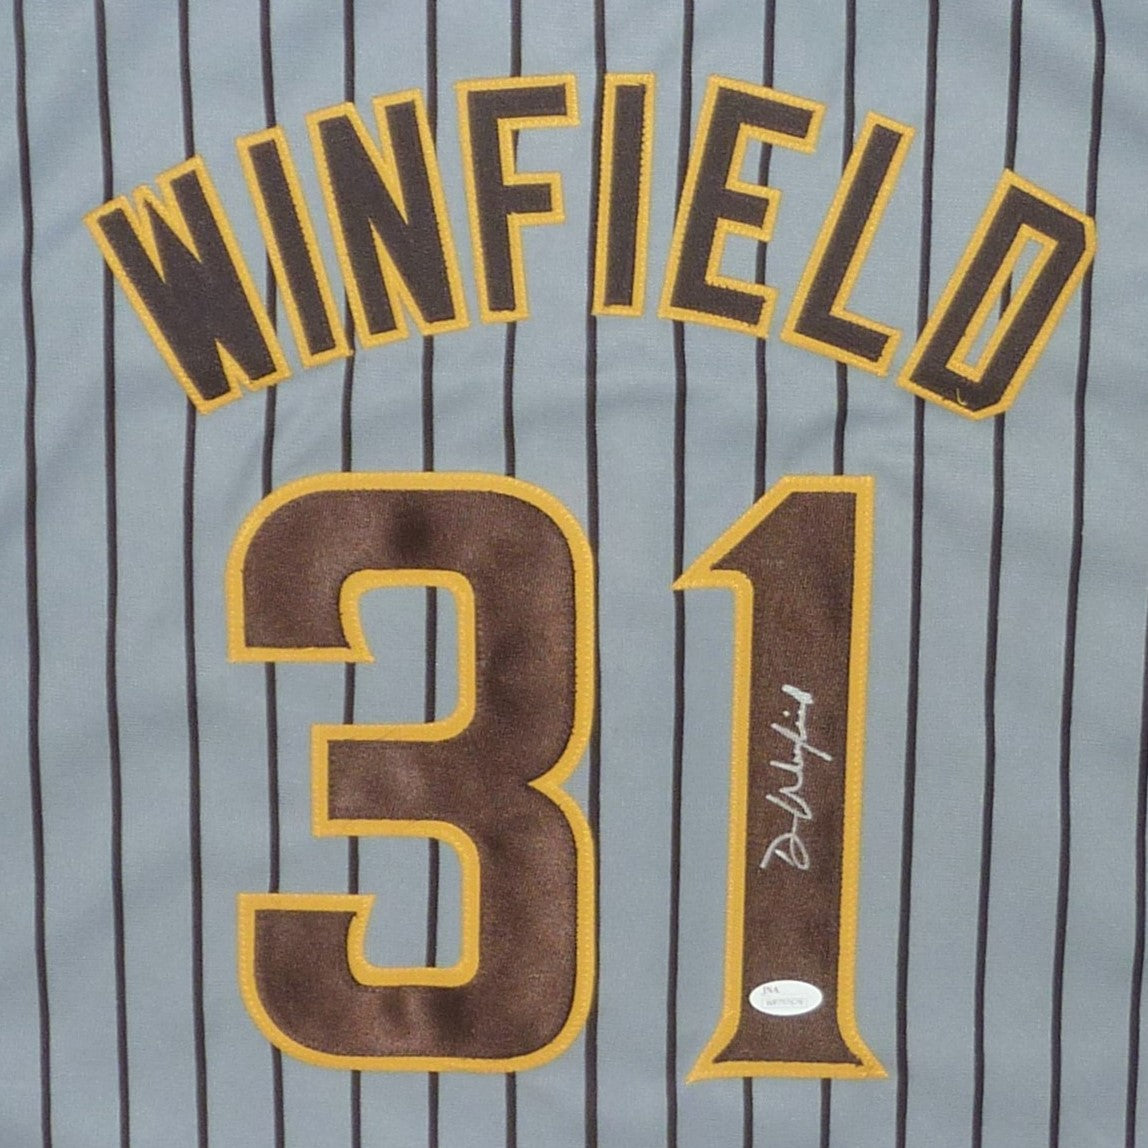 Dave Winfield Autographed San Diego (Pinstripe #31) Custom Baseball Jersey – JSA